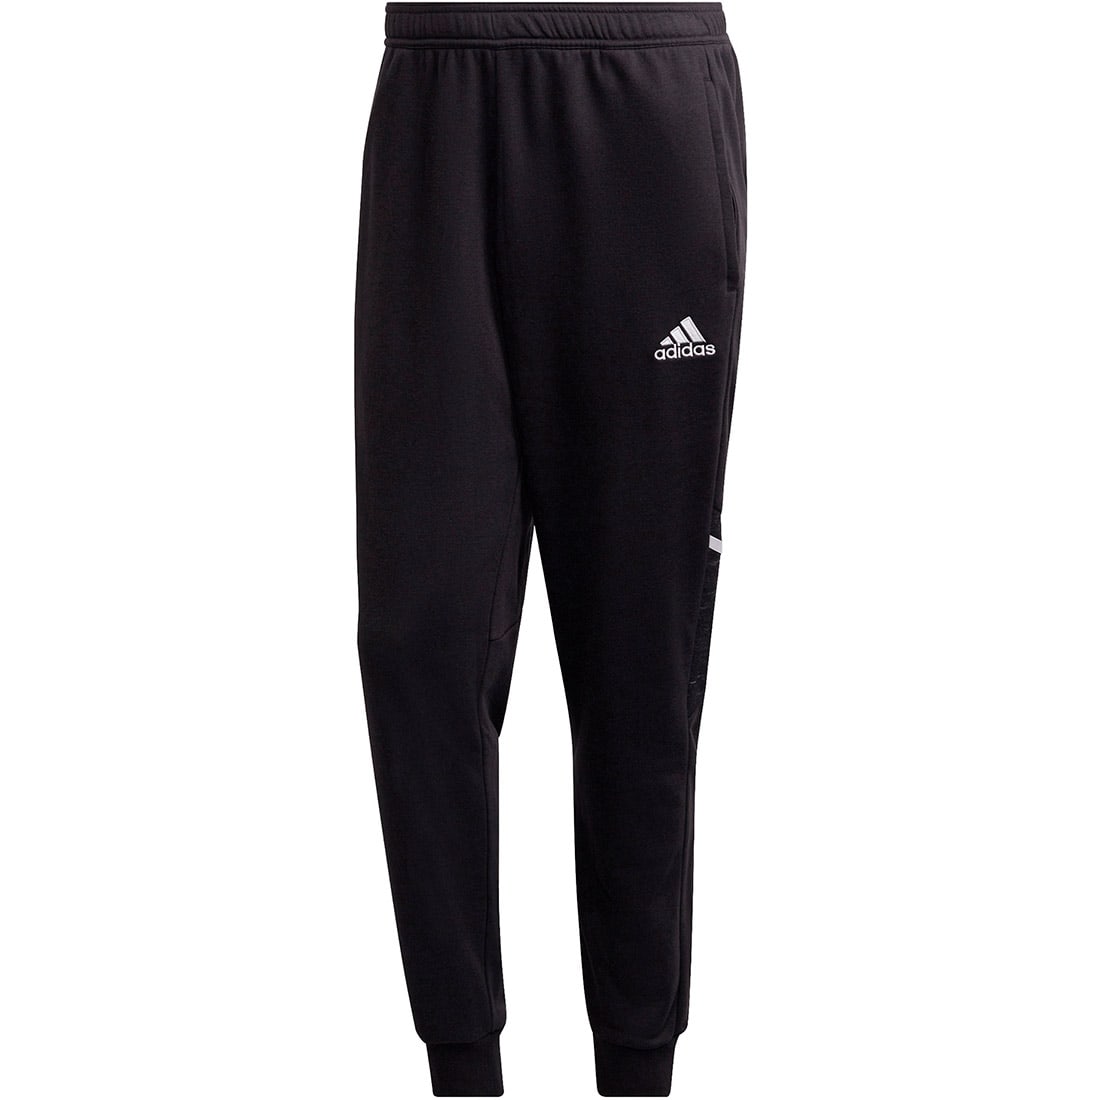 Adidas Herren Sweat Pants Condivo 22 schwarz-weiß